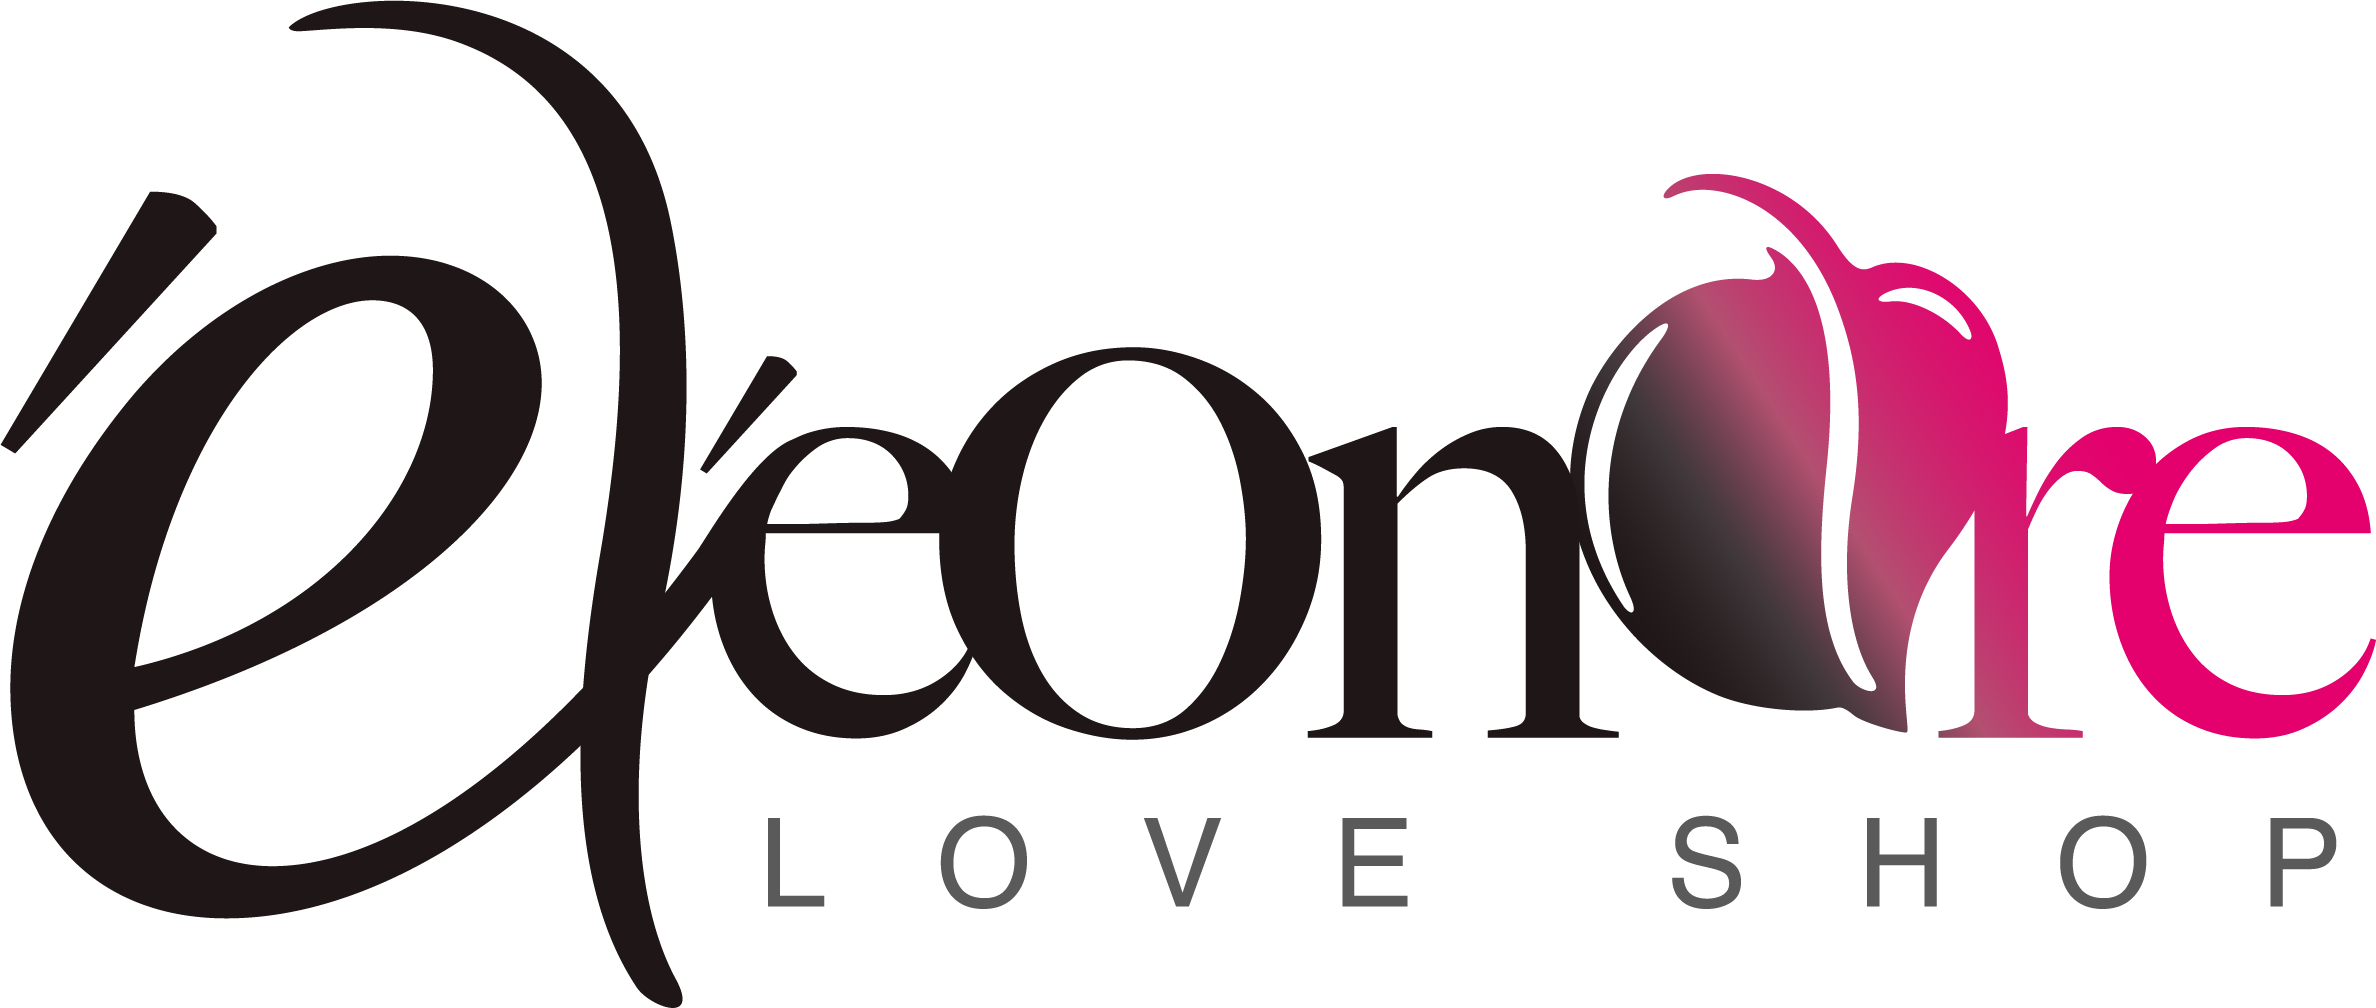 Logo Eleonoreloveshop